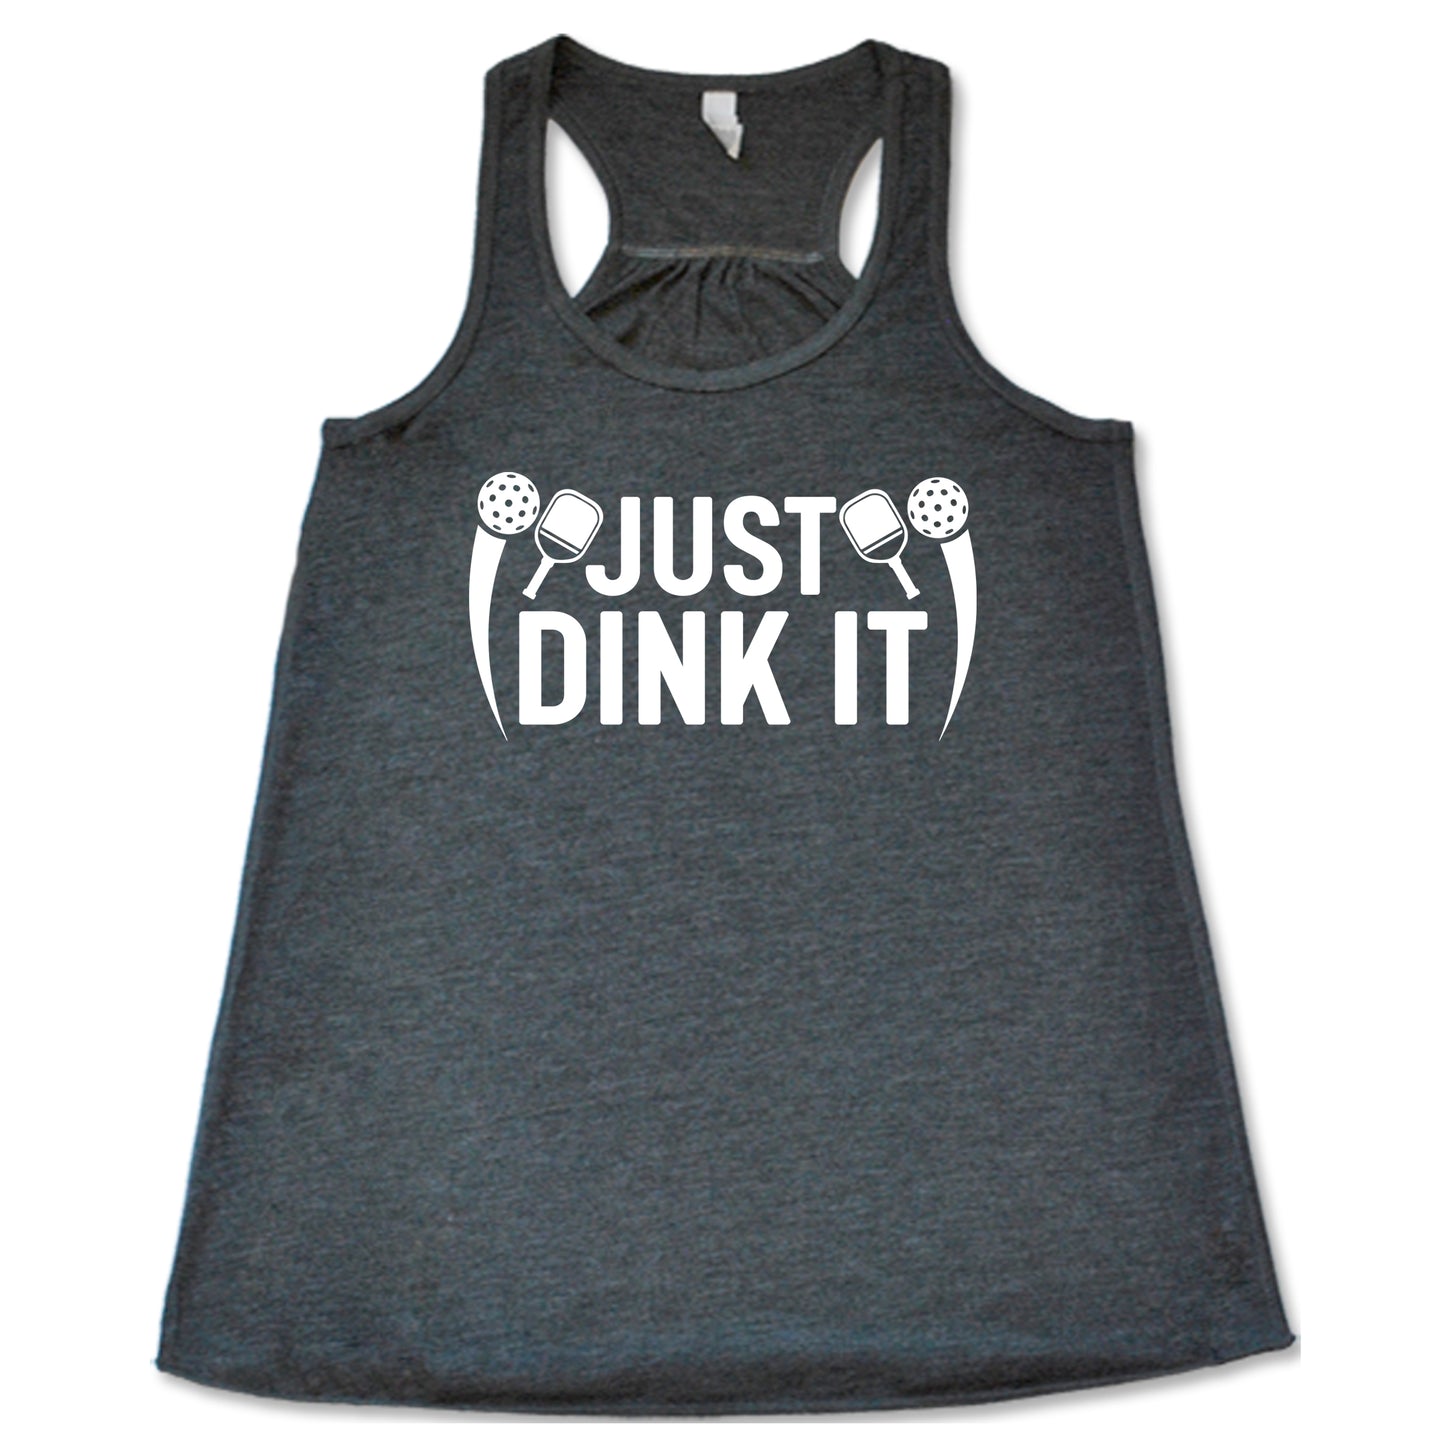 Just Dink It Shirt